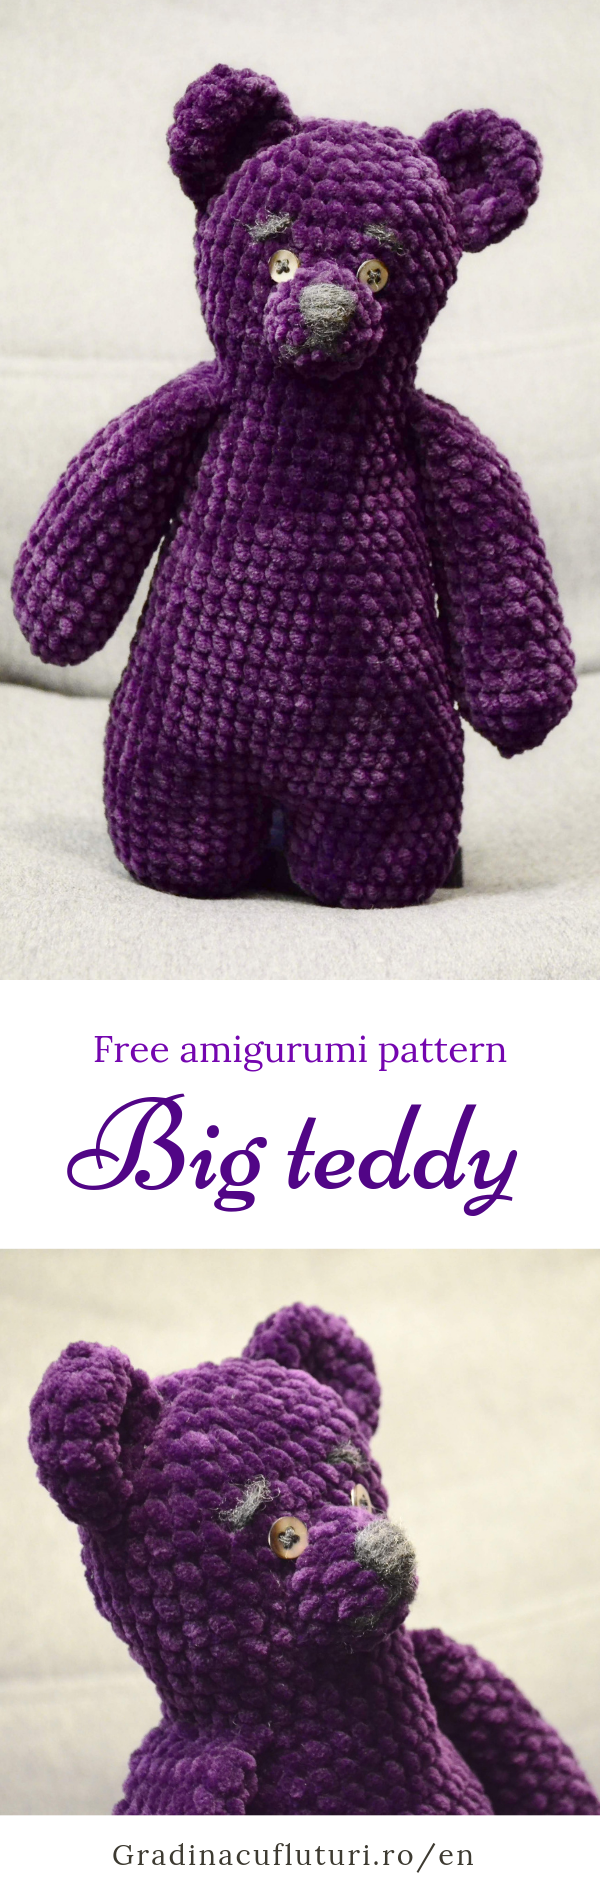 pinterest big teddy amigurumi free pattern